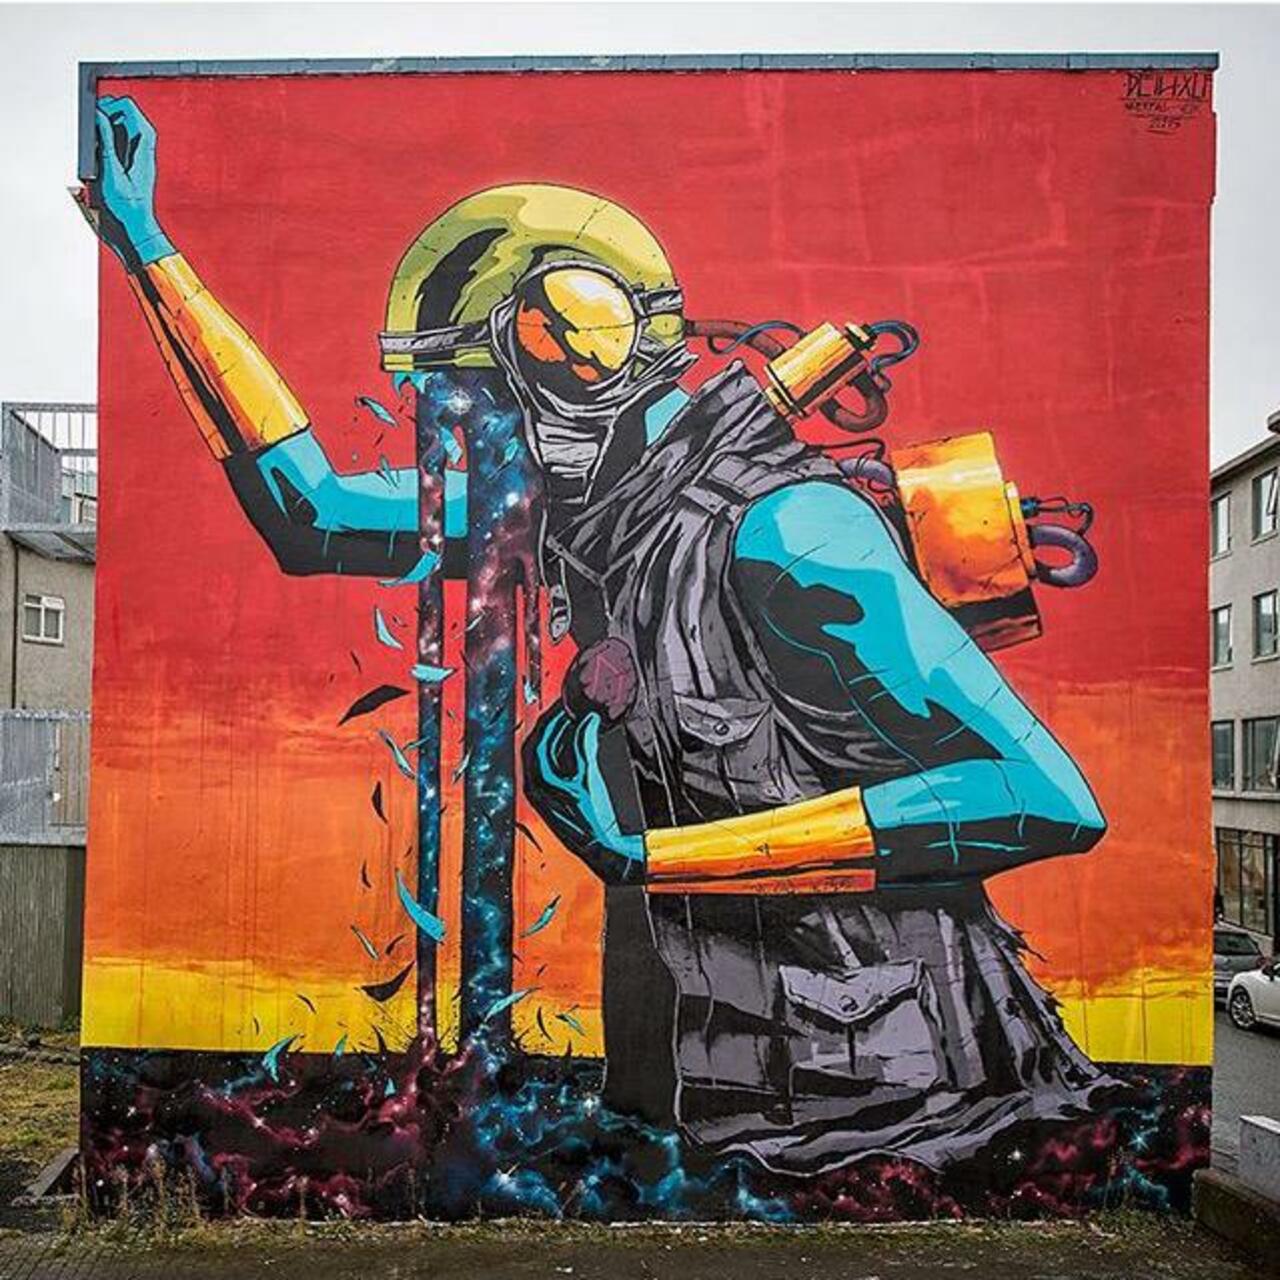 Street Art by Deih in Reykjavik 

#art #graffiti #mural #streetart https://t.co/NdtAGB7PIo